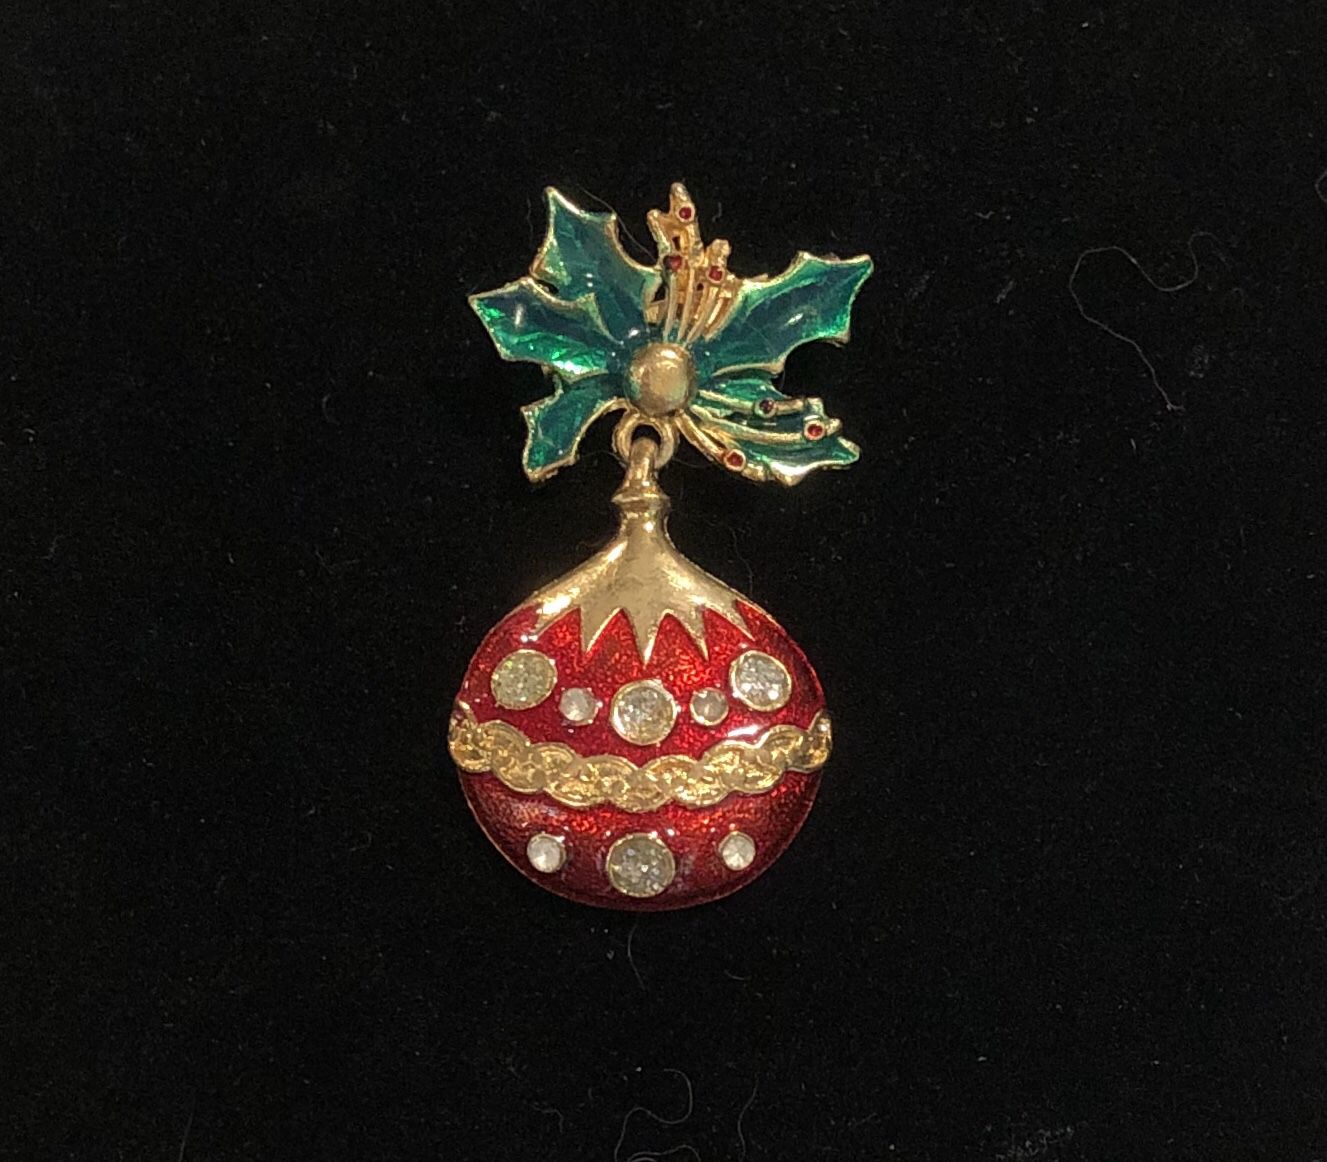 Unusual holiday Christmas pin brooch